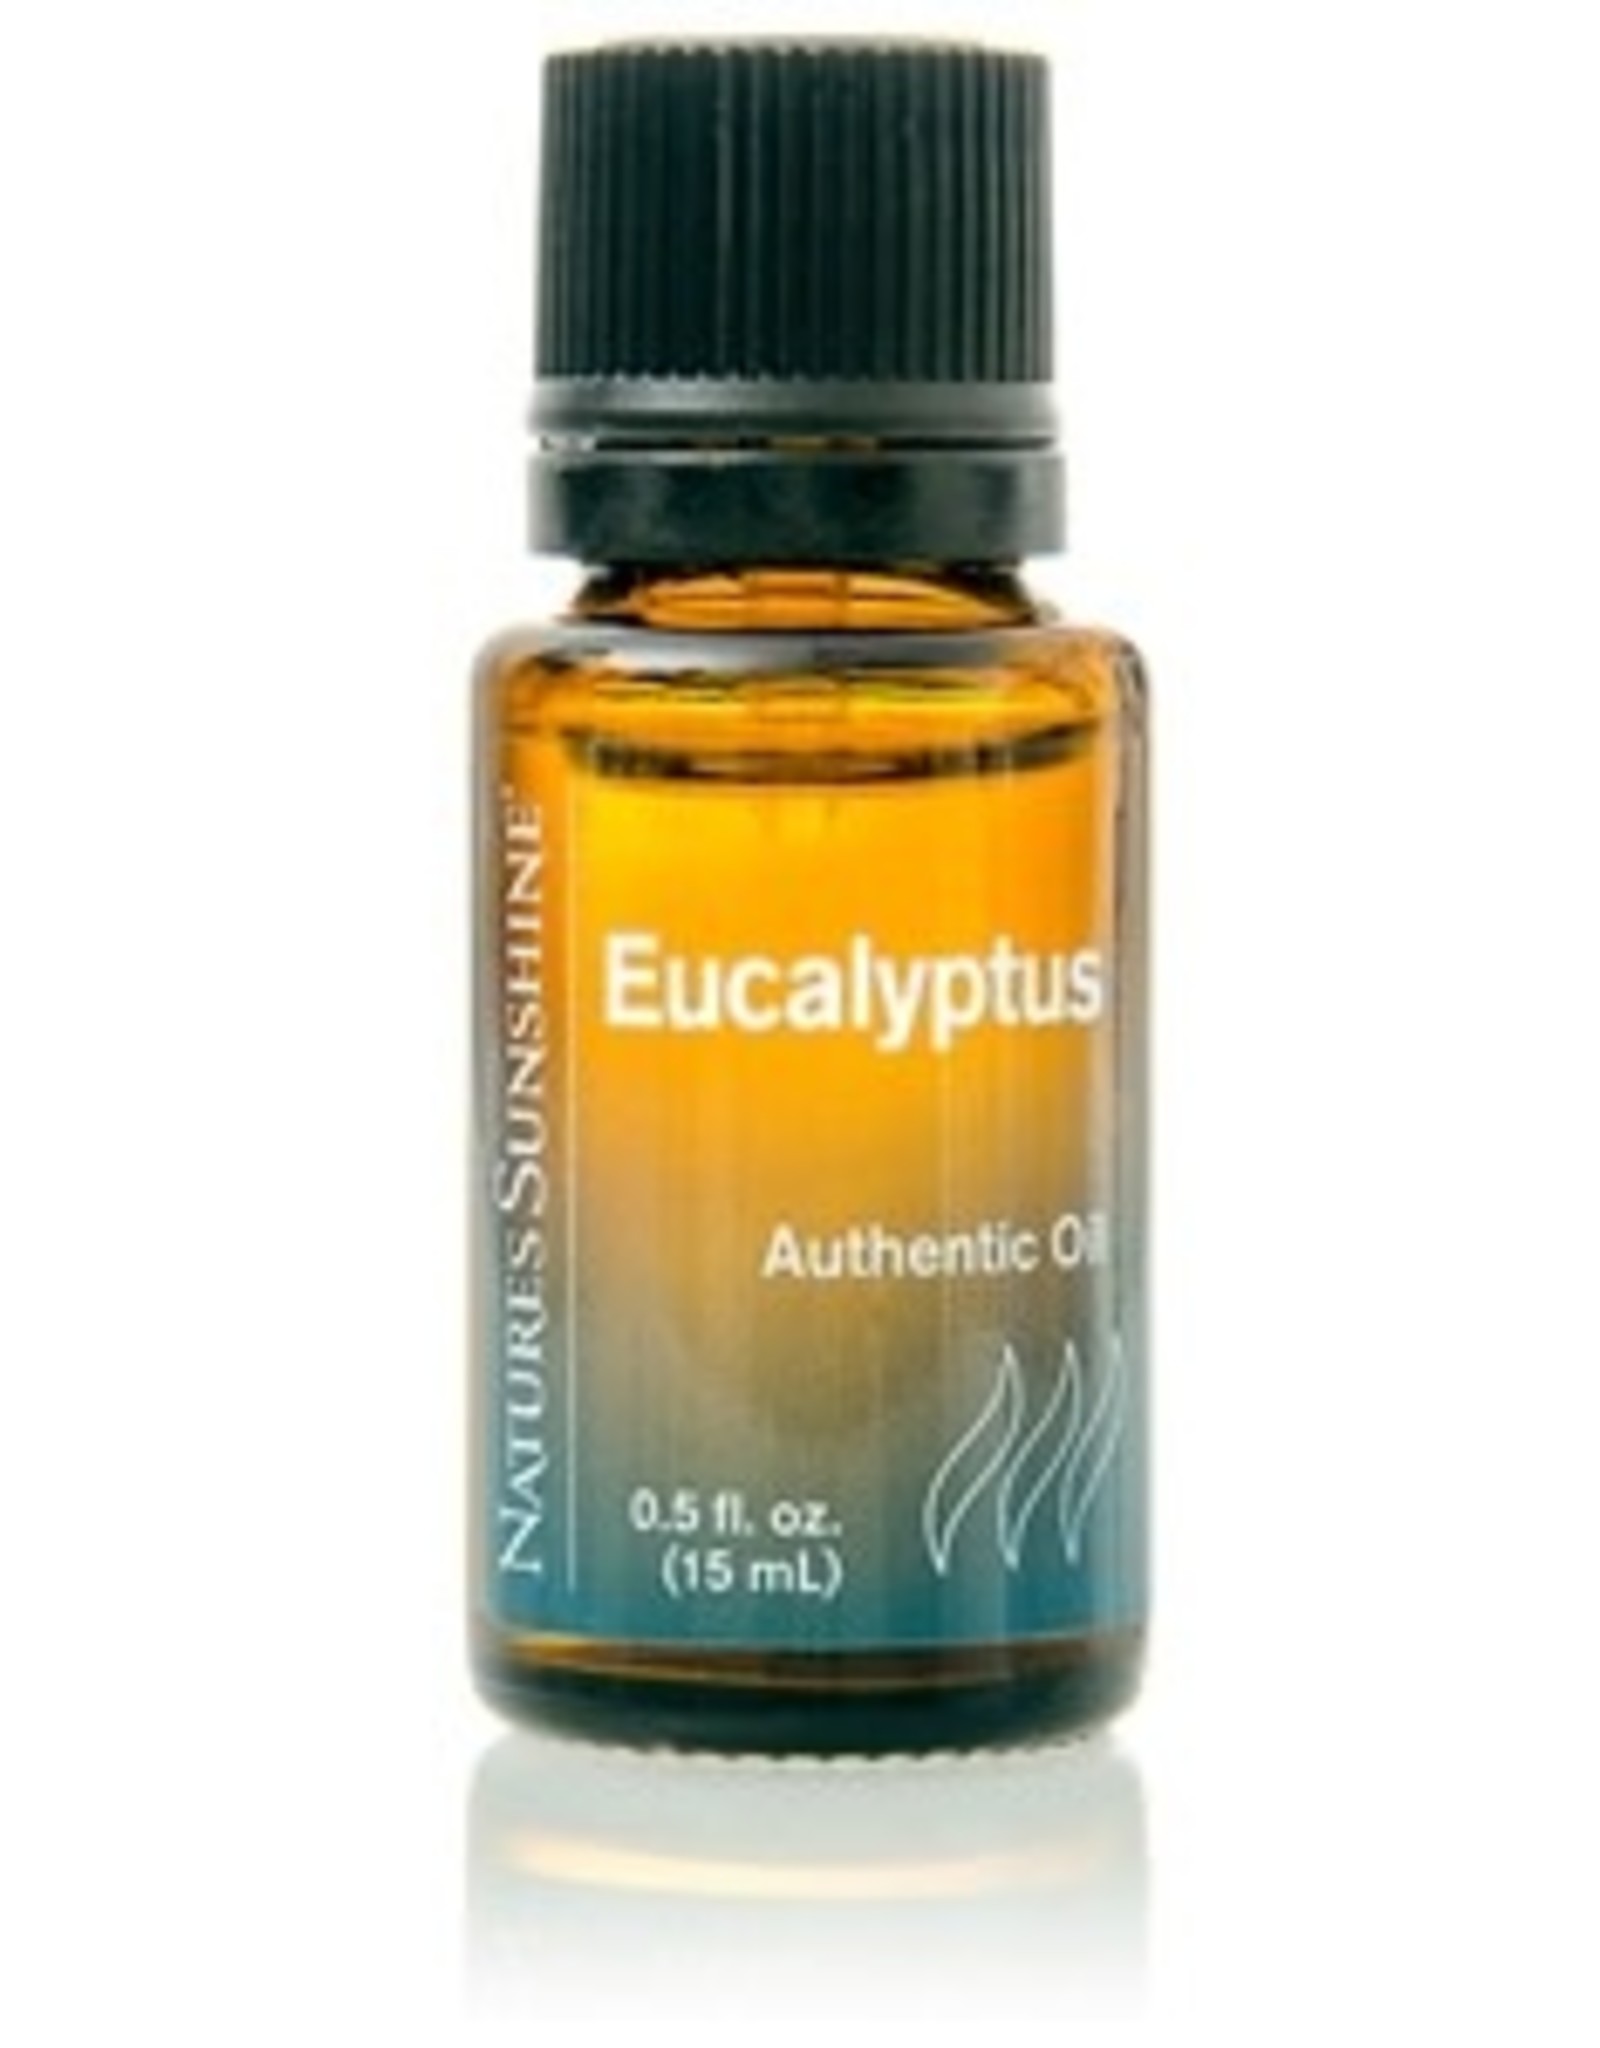 Nature's Sunshine Eucalyptus Oil